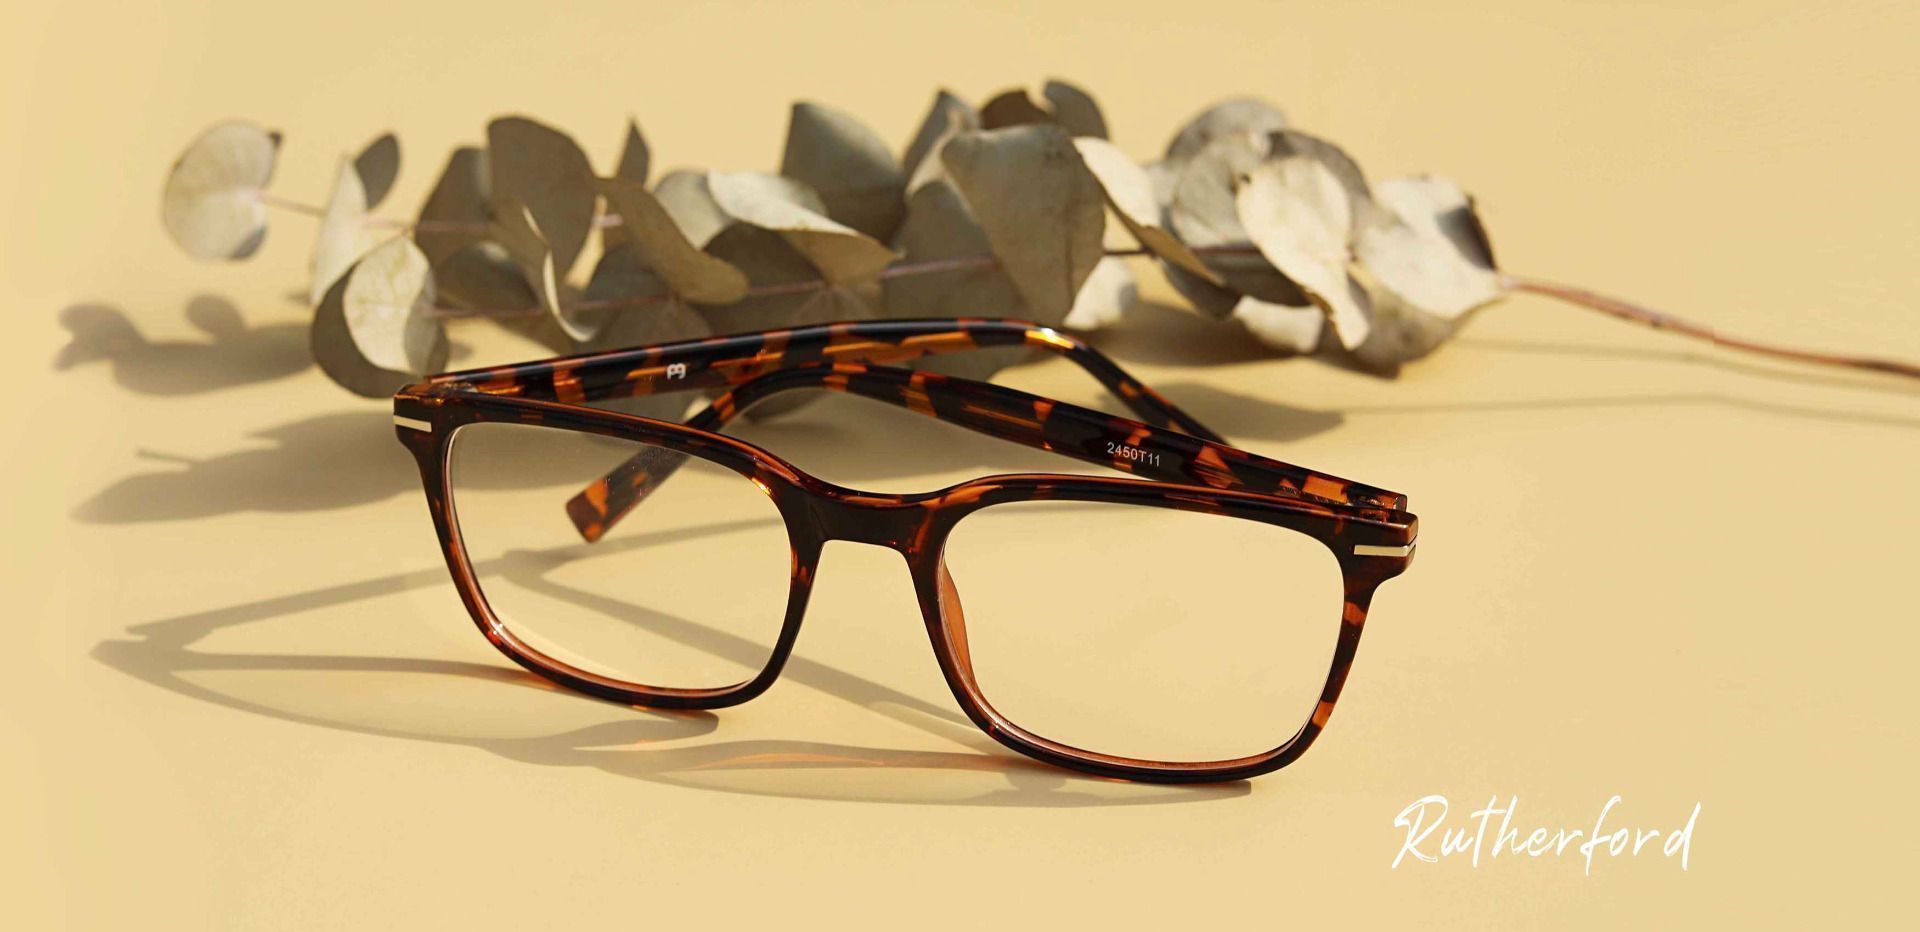 Rutherford Rectangle Prescription Glasses - Tortoise